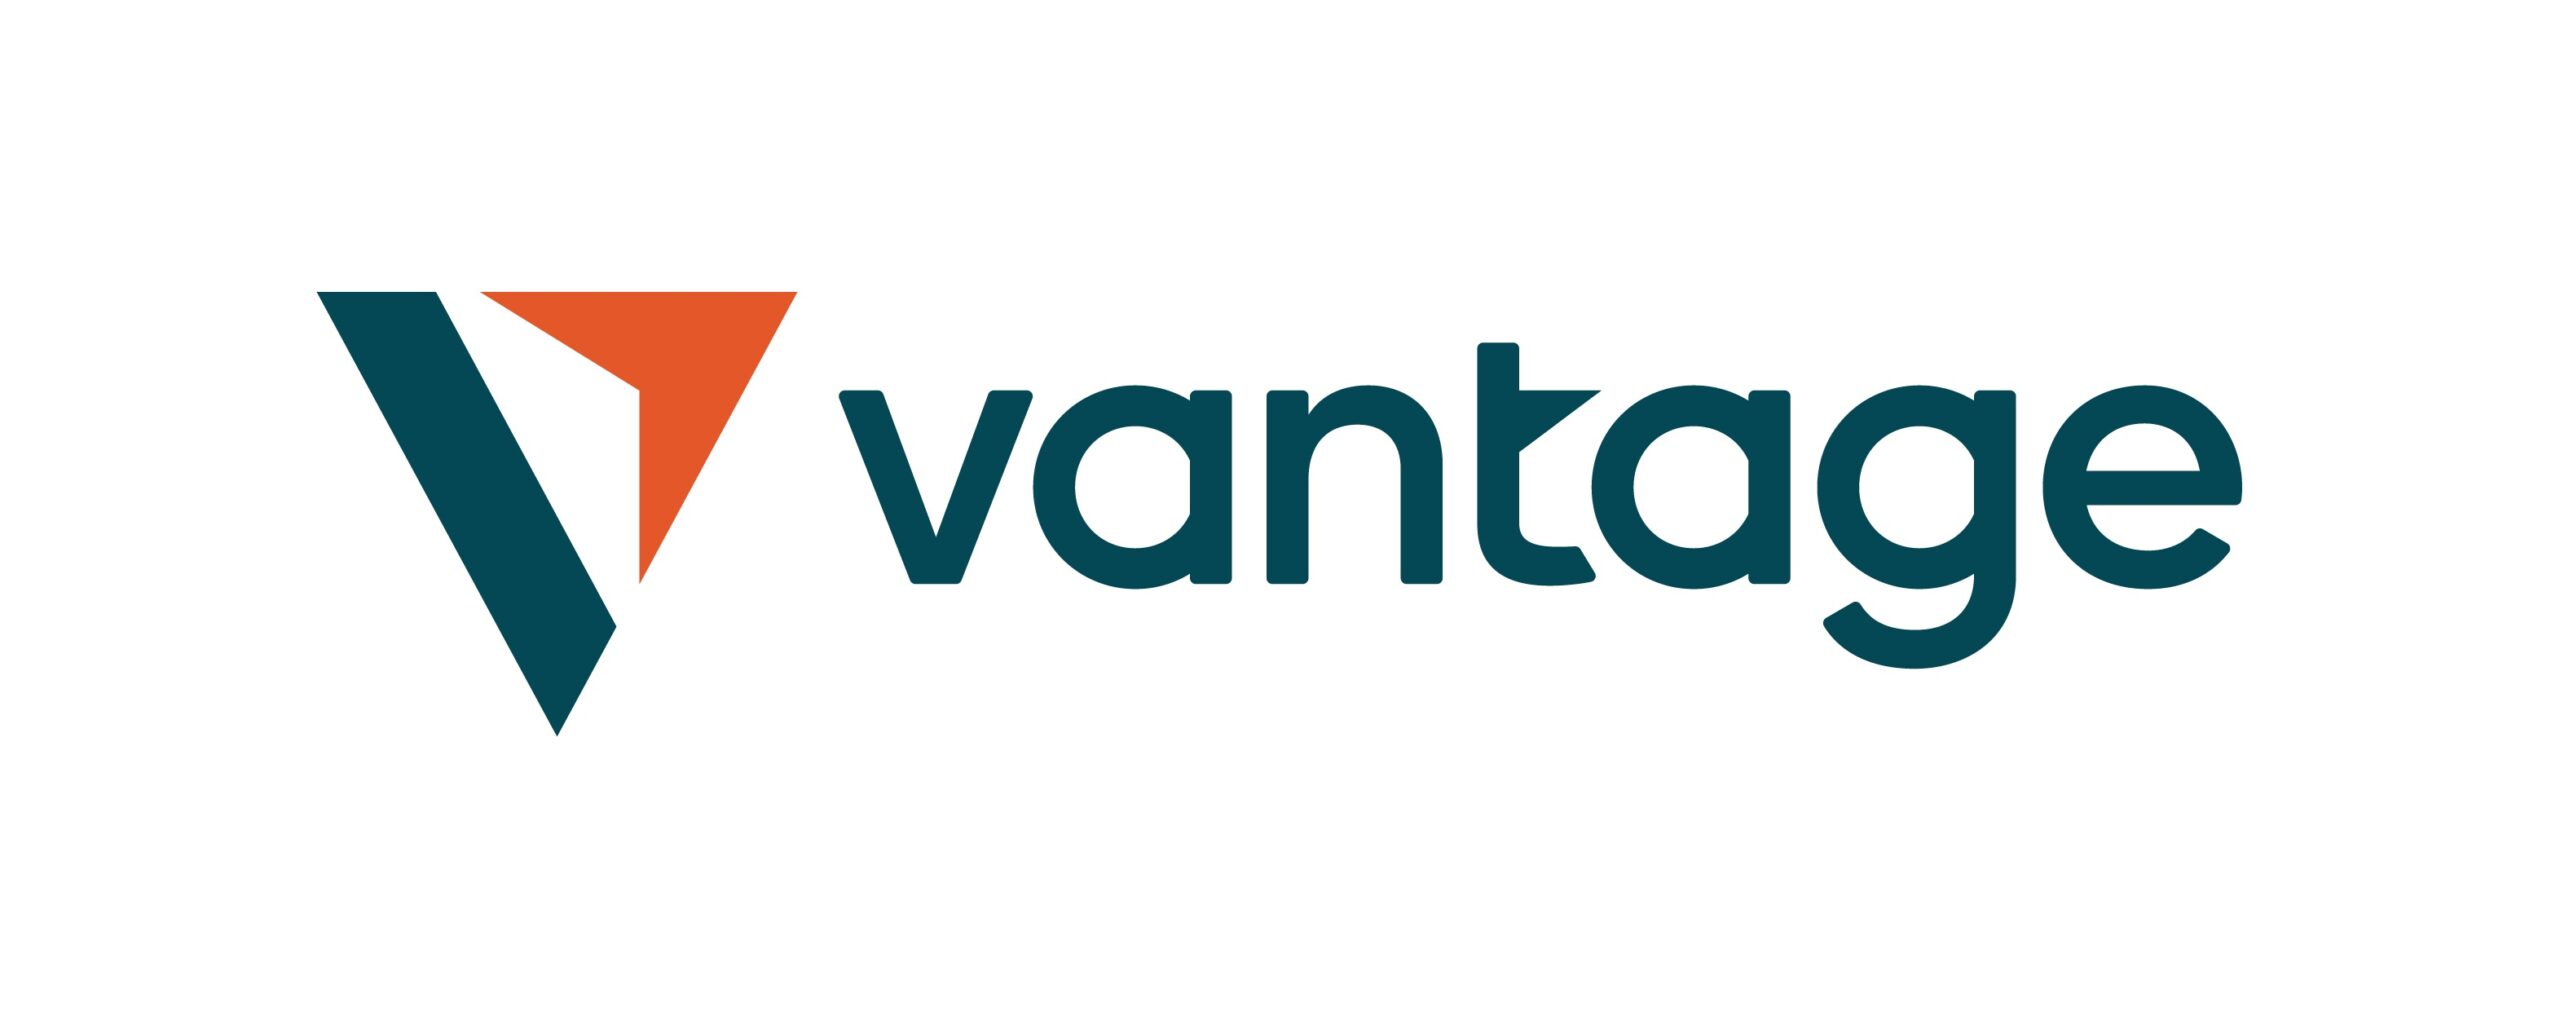 Vantage为英国机构交易者推出资金流动服务